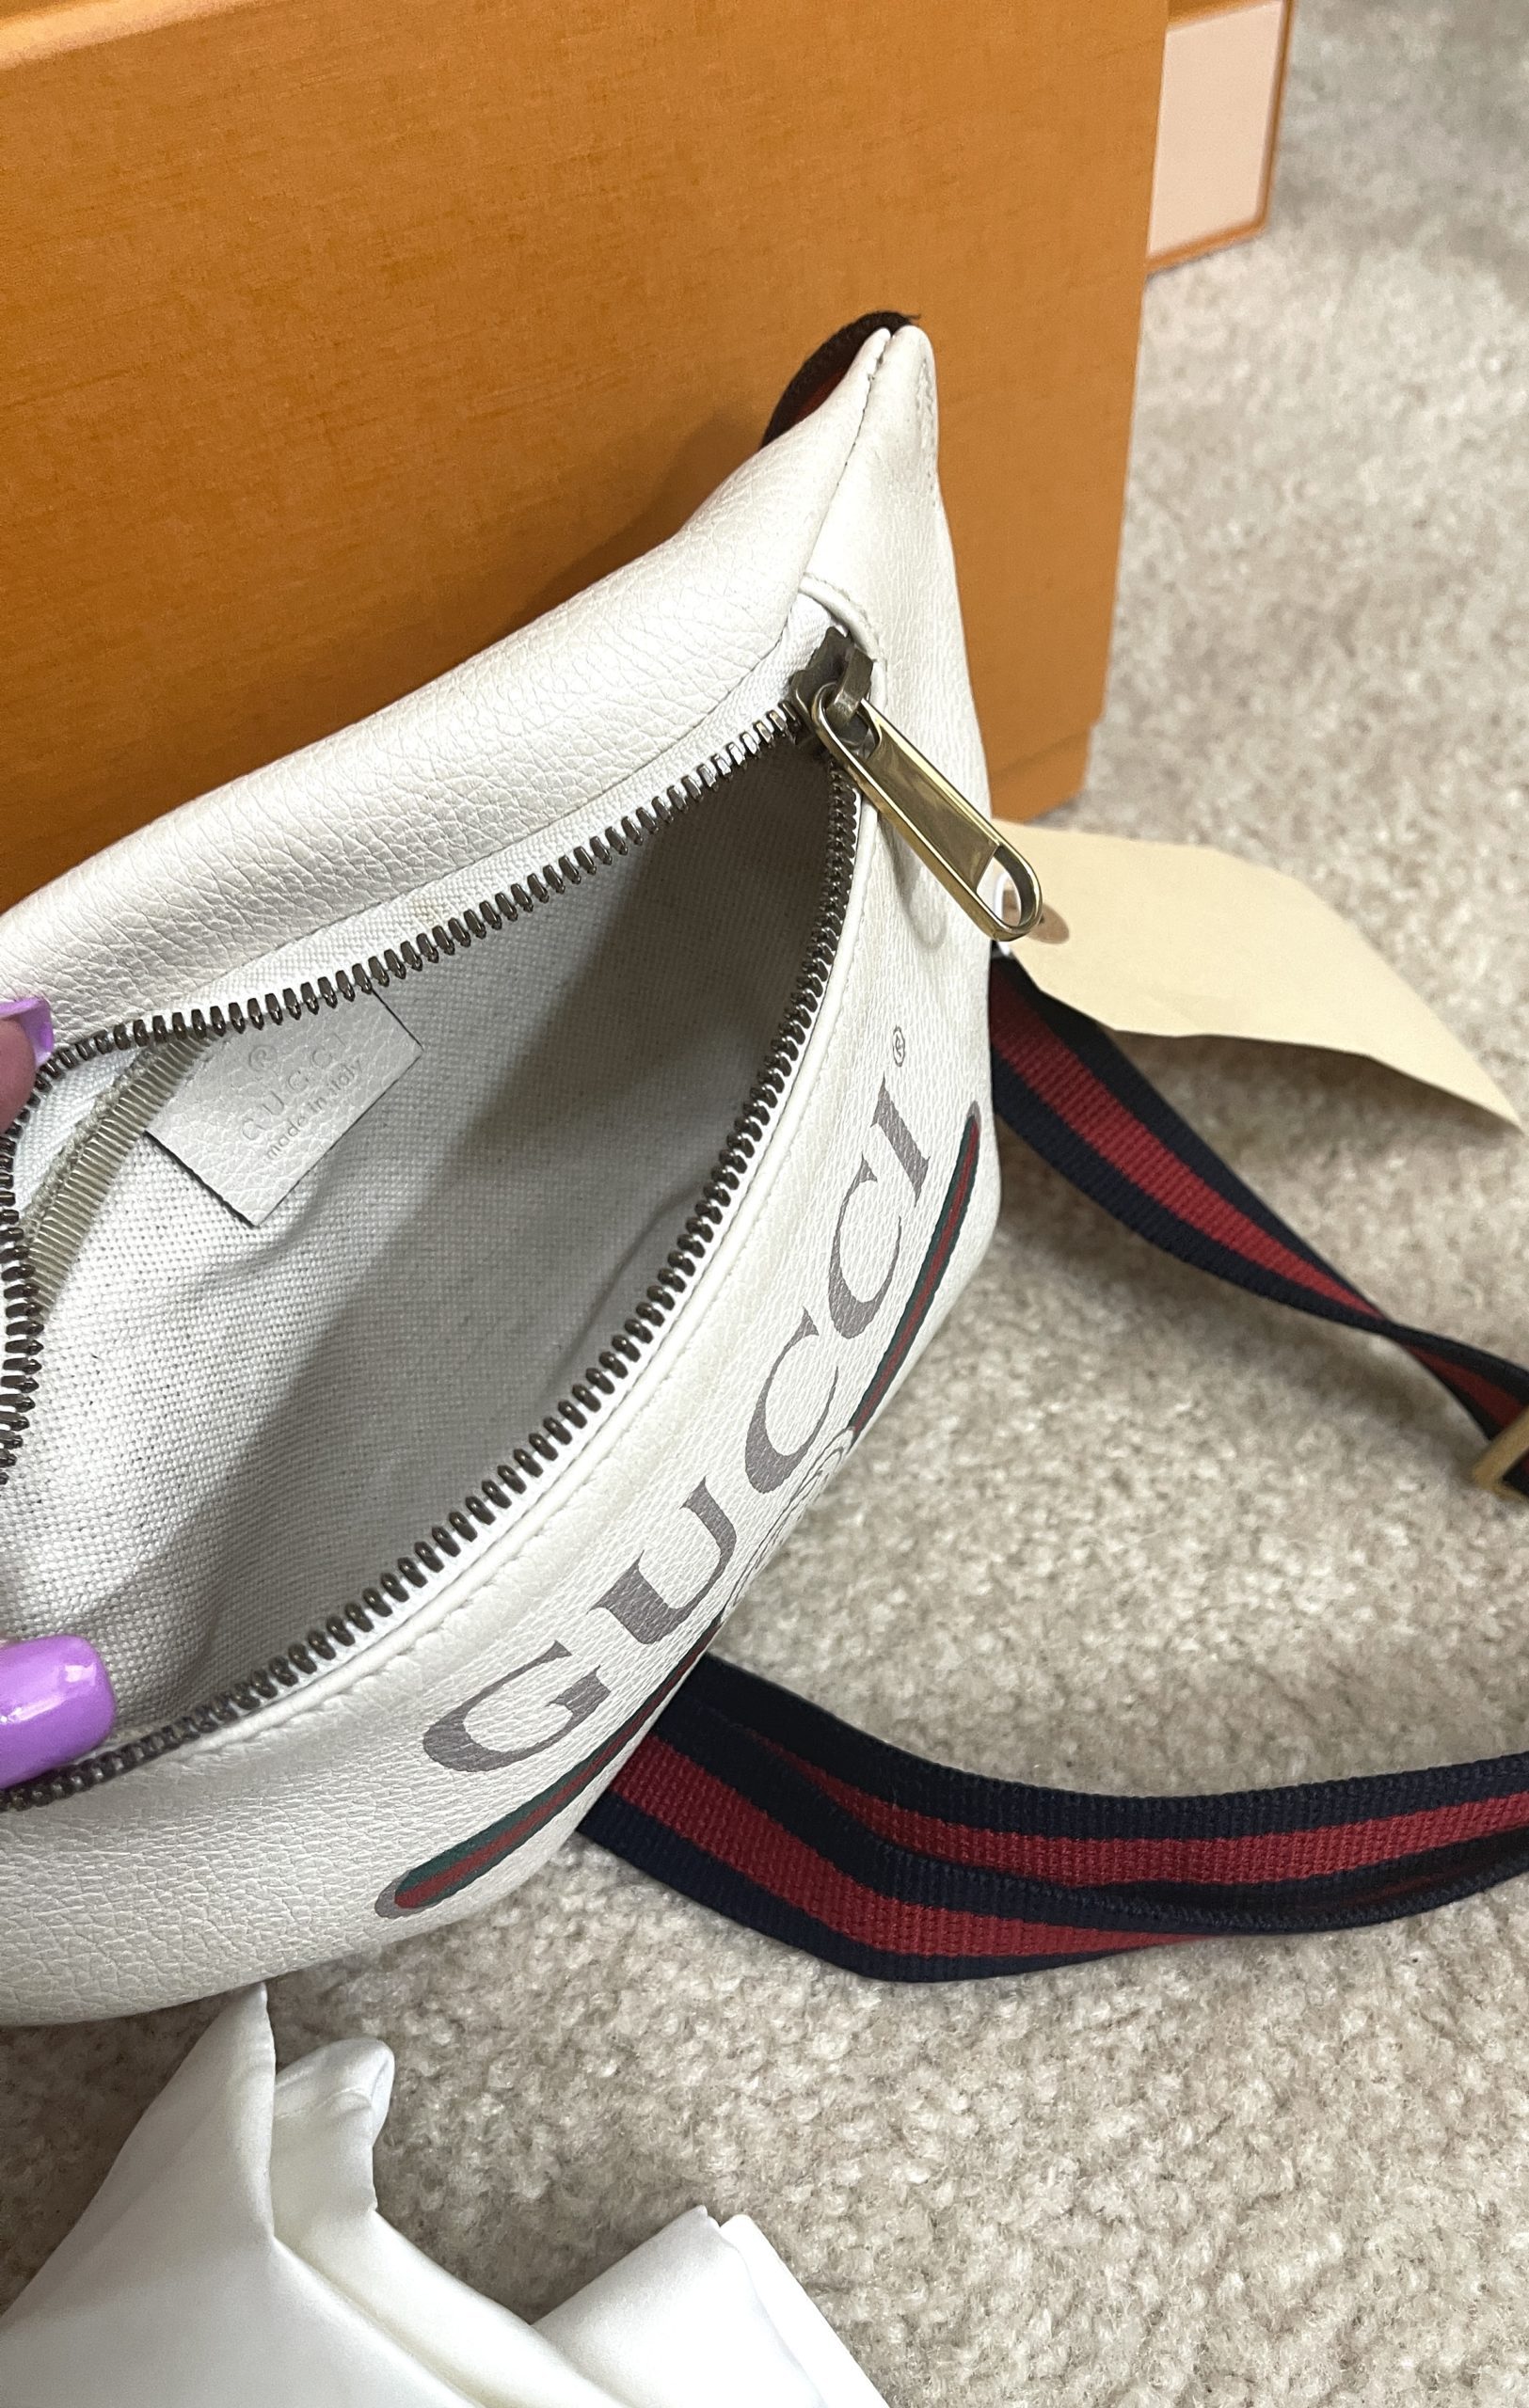 Used Gucci GG Supreme Belt Bag